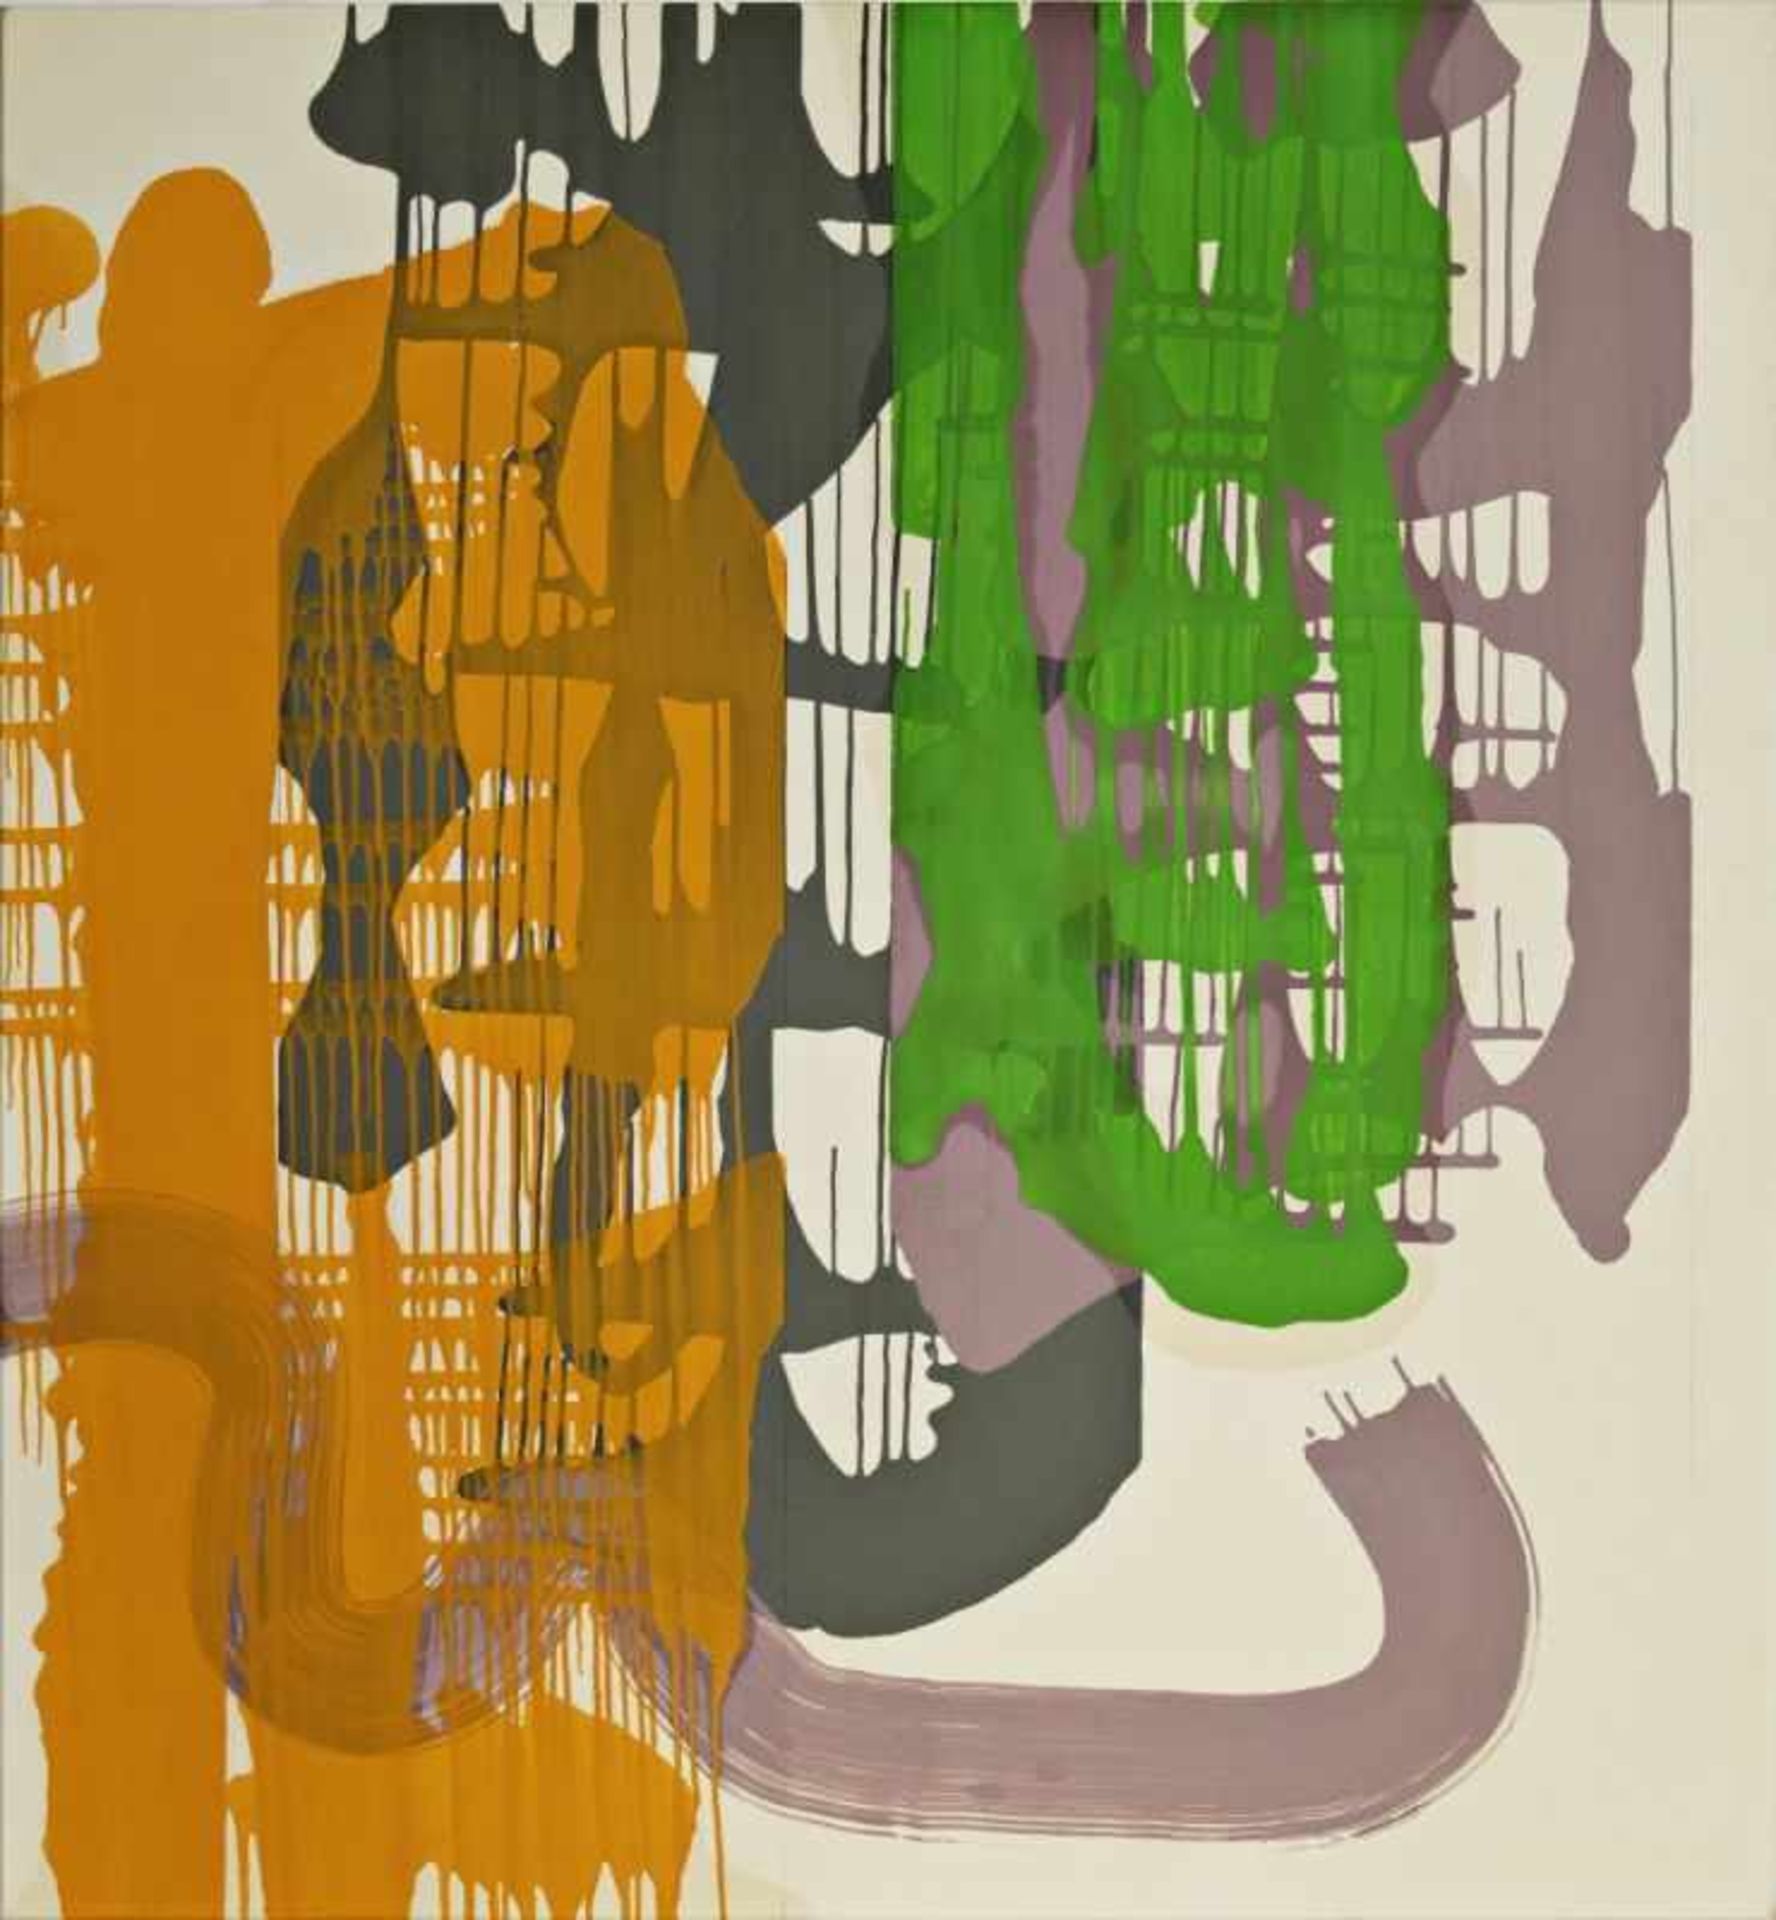 THOMAS REINHOLD (1953 WIEN) ARIADNE, 2007 Öl auf Leinwand, 151 x 141 cm Signatur Rückseite: